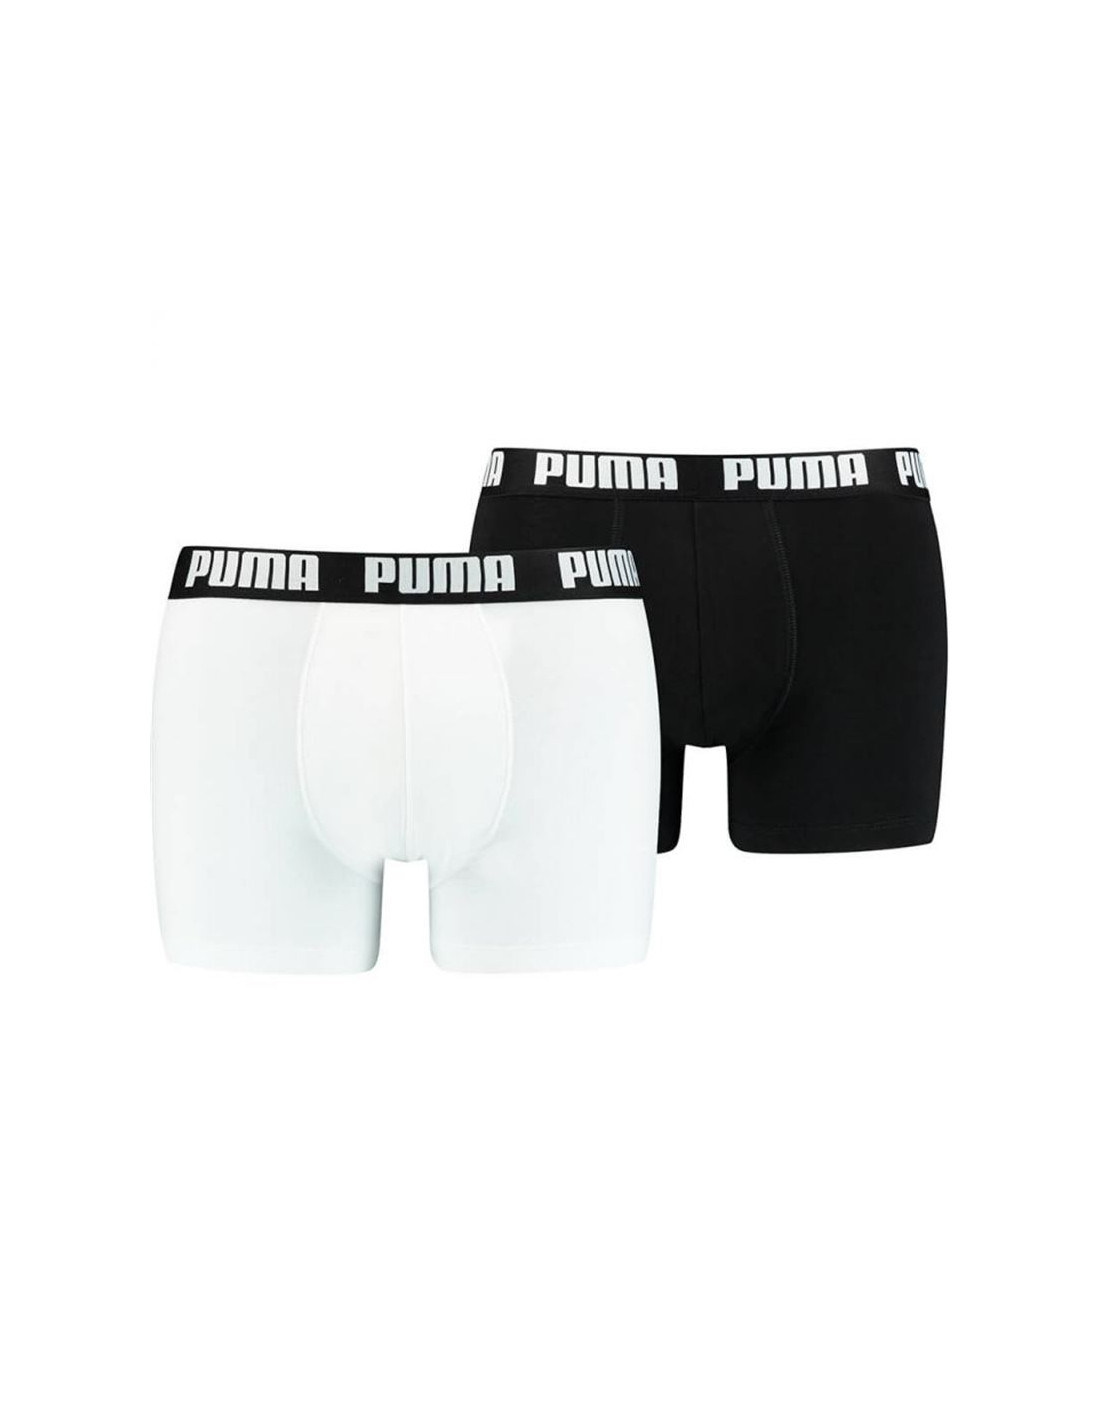 Calzoncillos sportswear puma basic boxer 2 pack